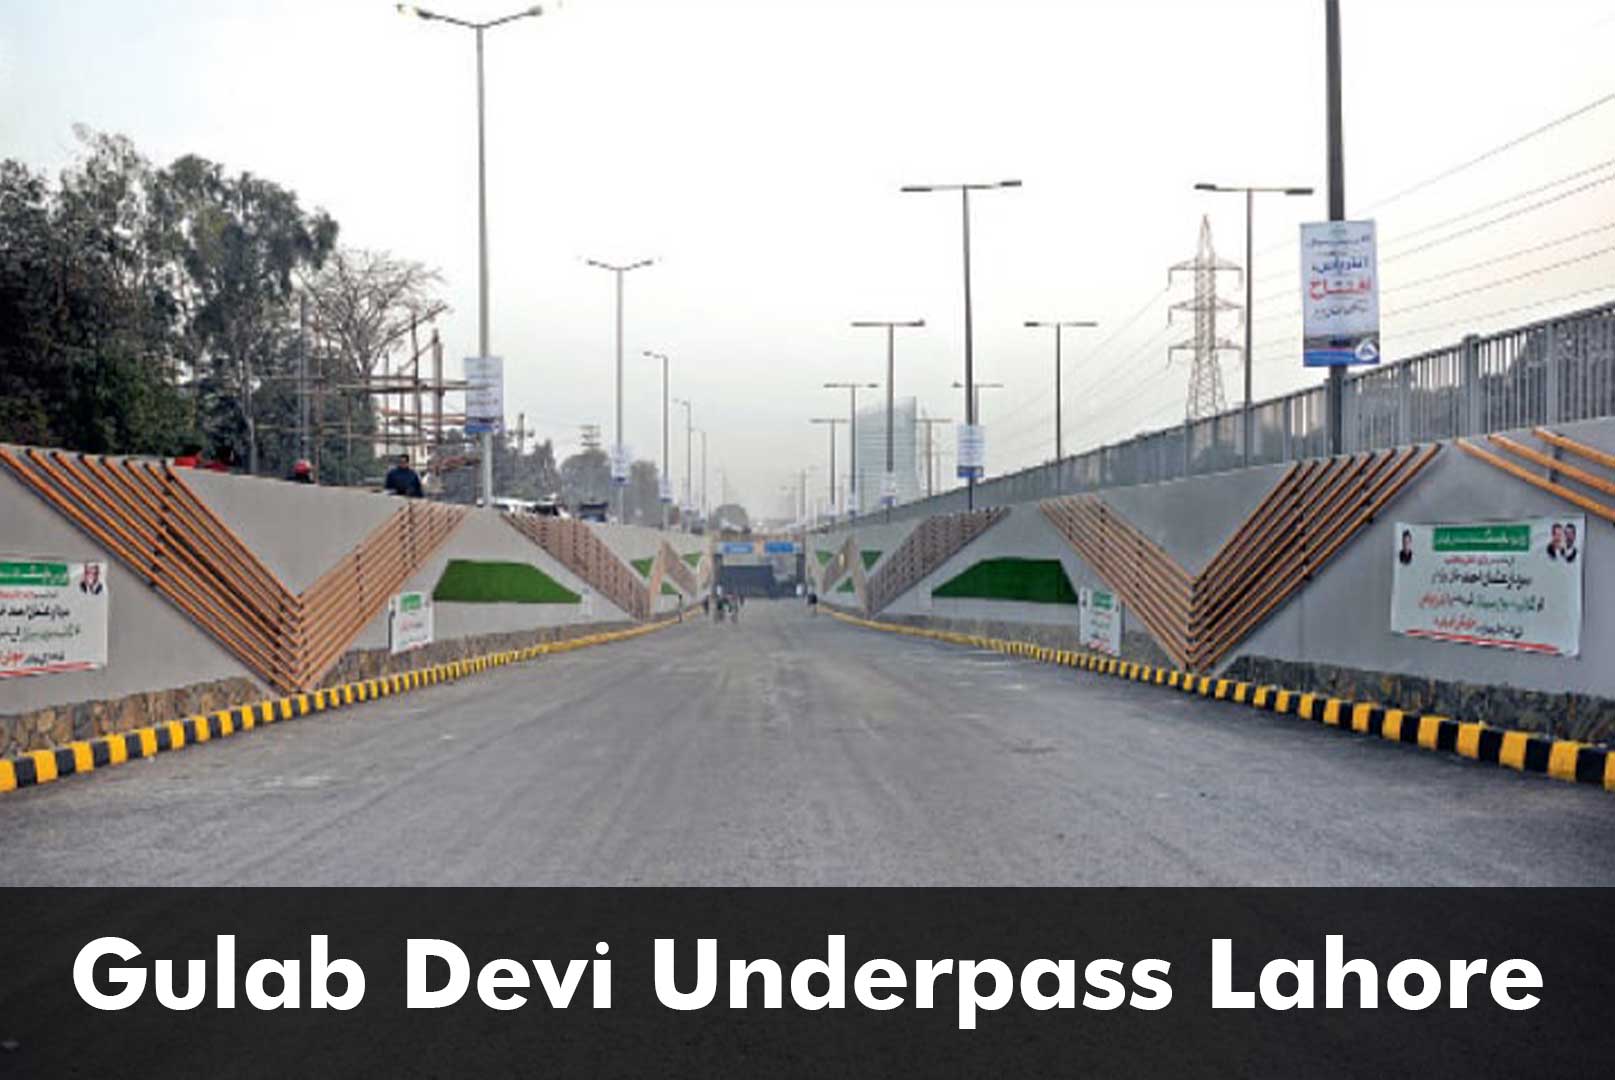 Gulab-devi-underpass-Lahore-01-2-min